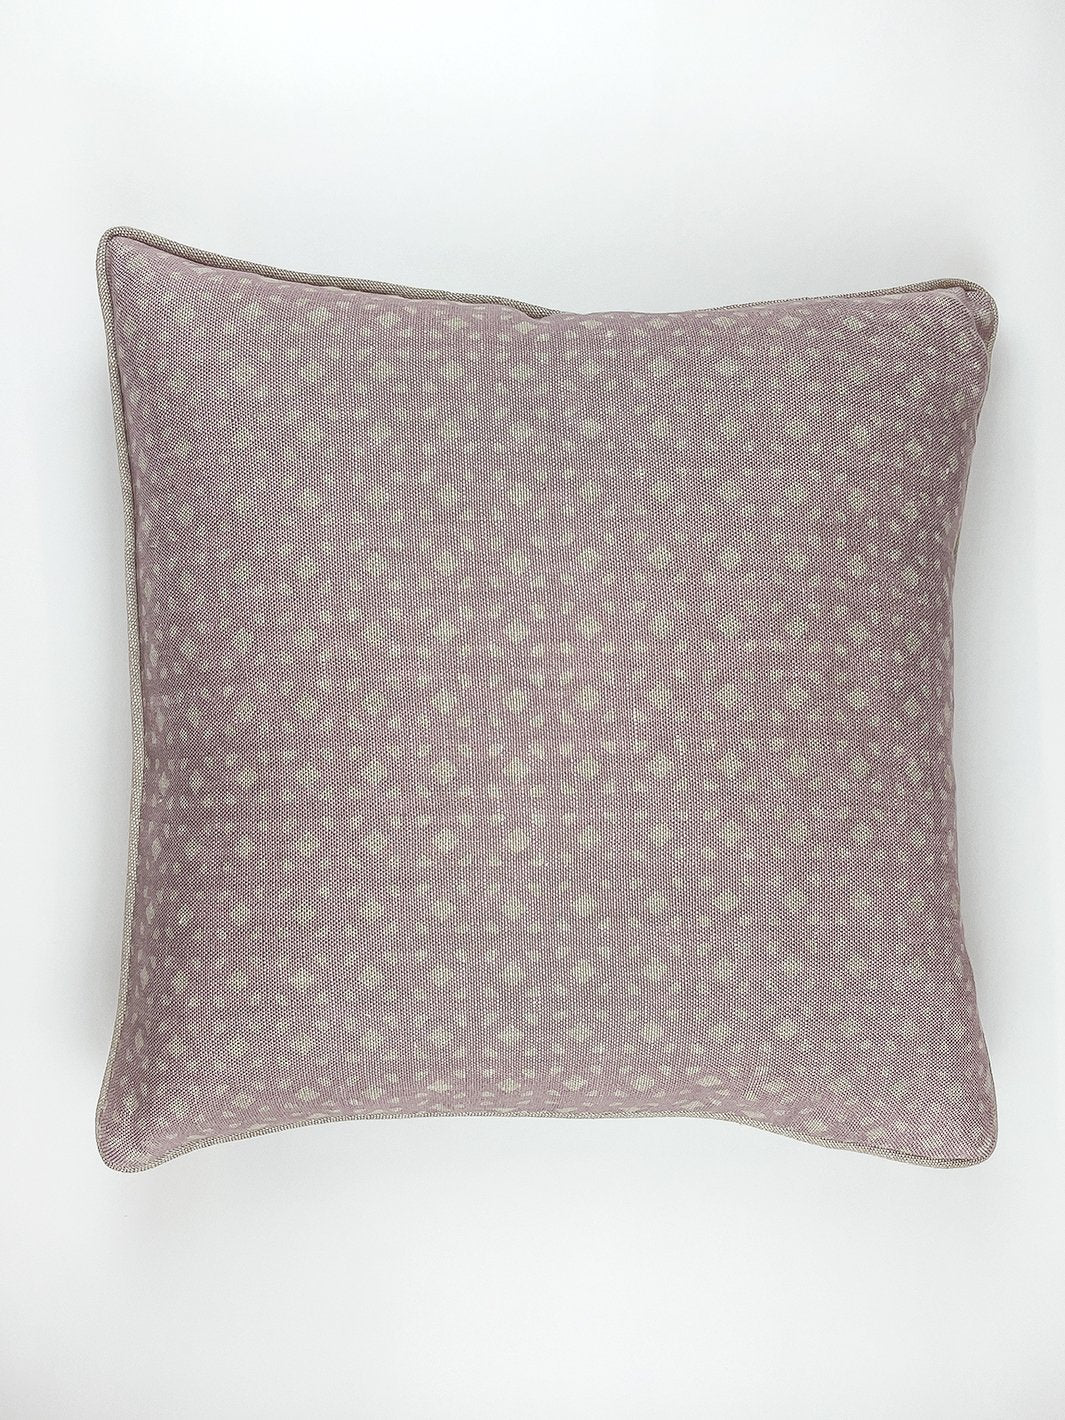 'Barbie™ Dreamhouse Breezeblocks' Throw Pillow - Lavender on Flax Linen